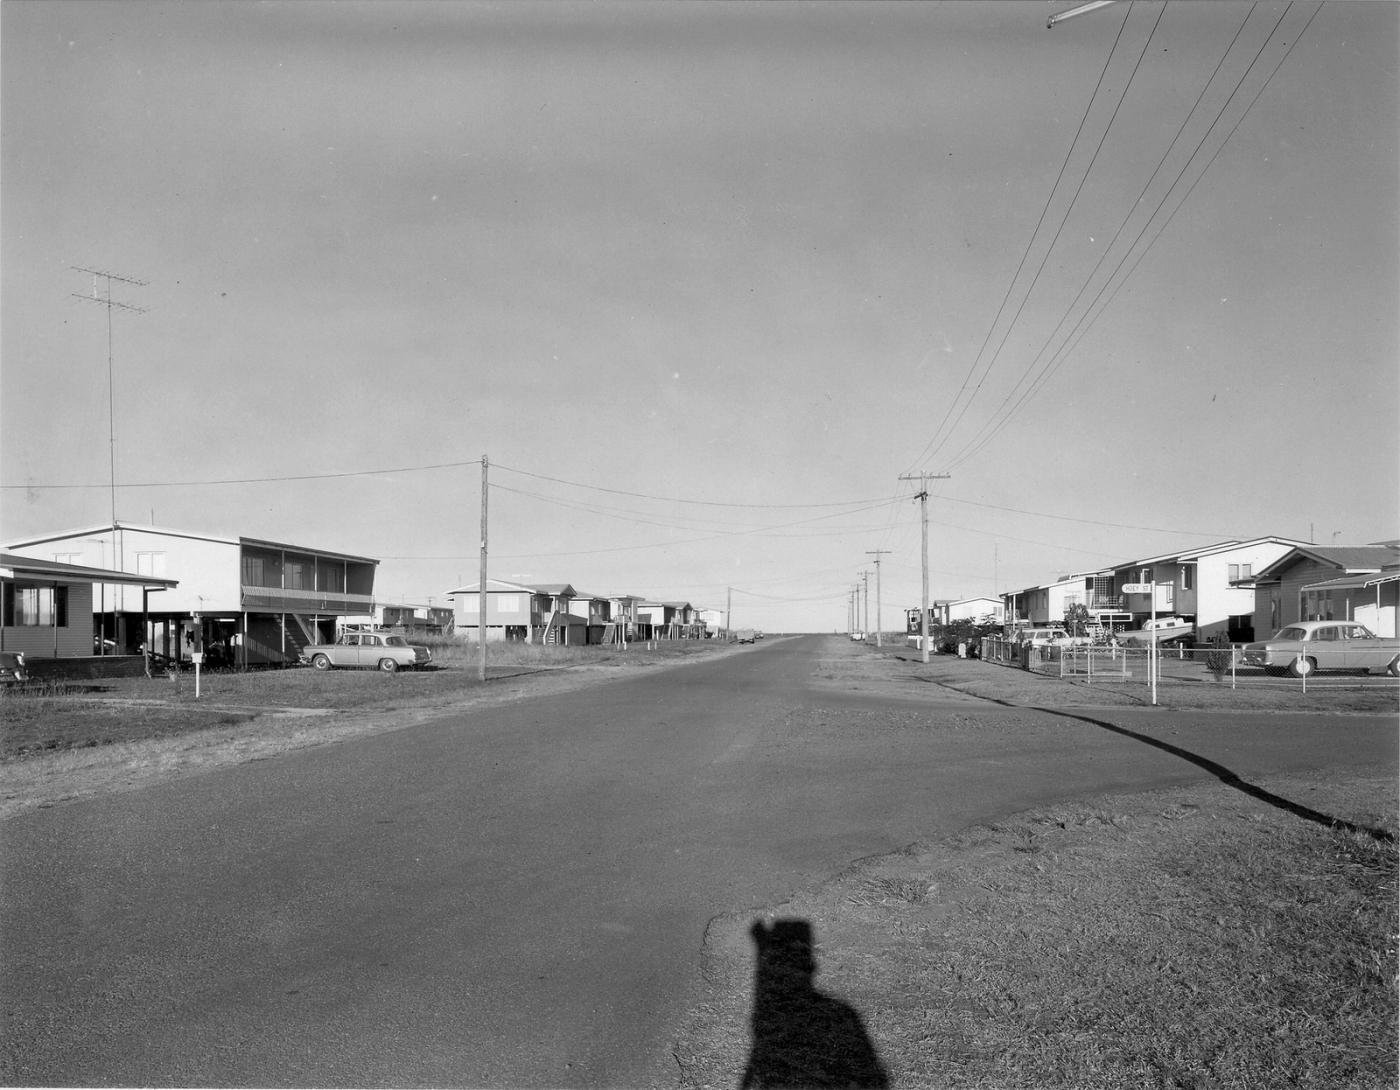 View of a wide open street space in Mackay